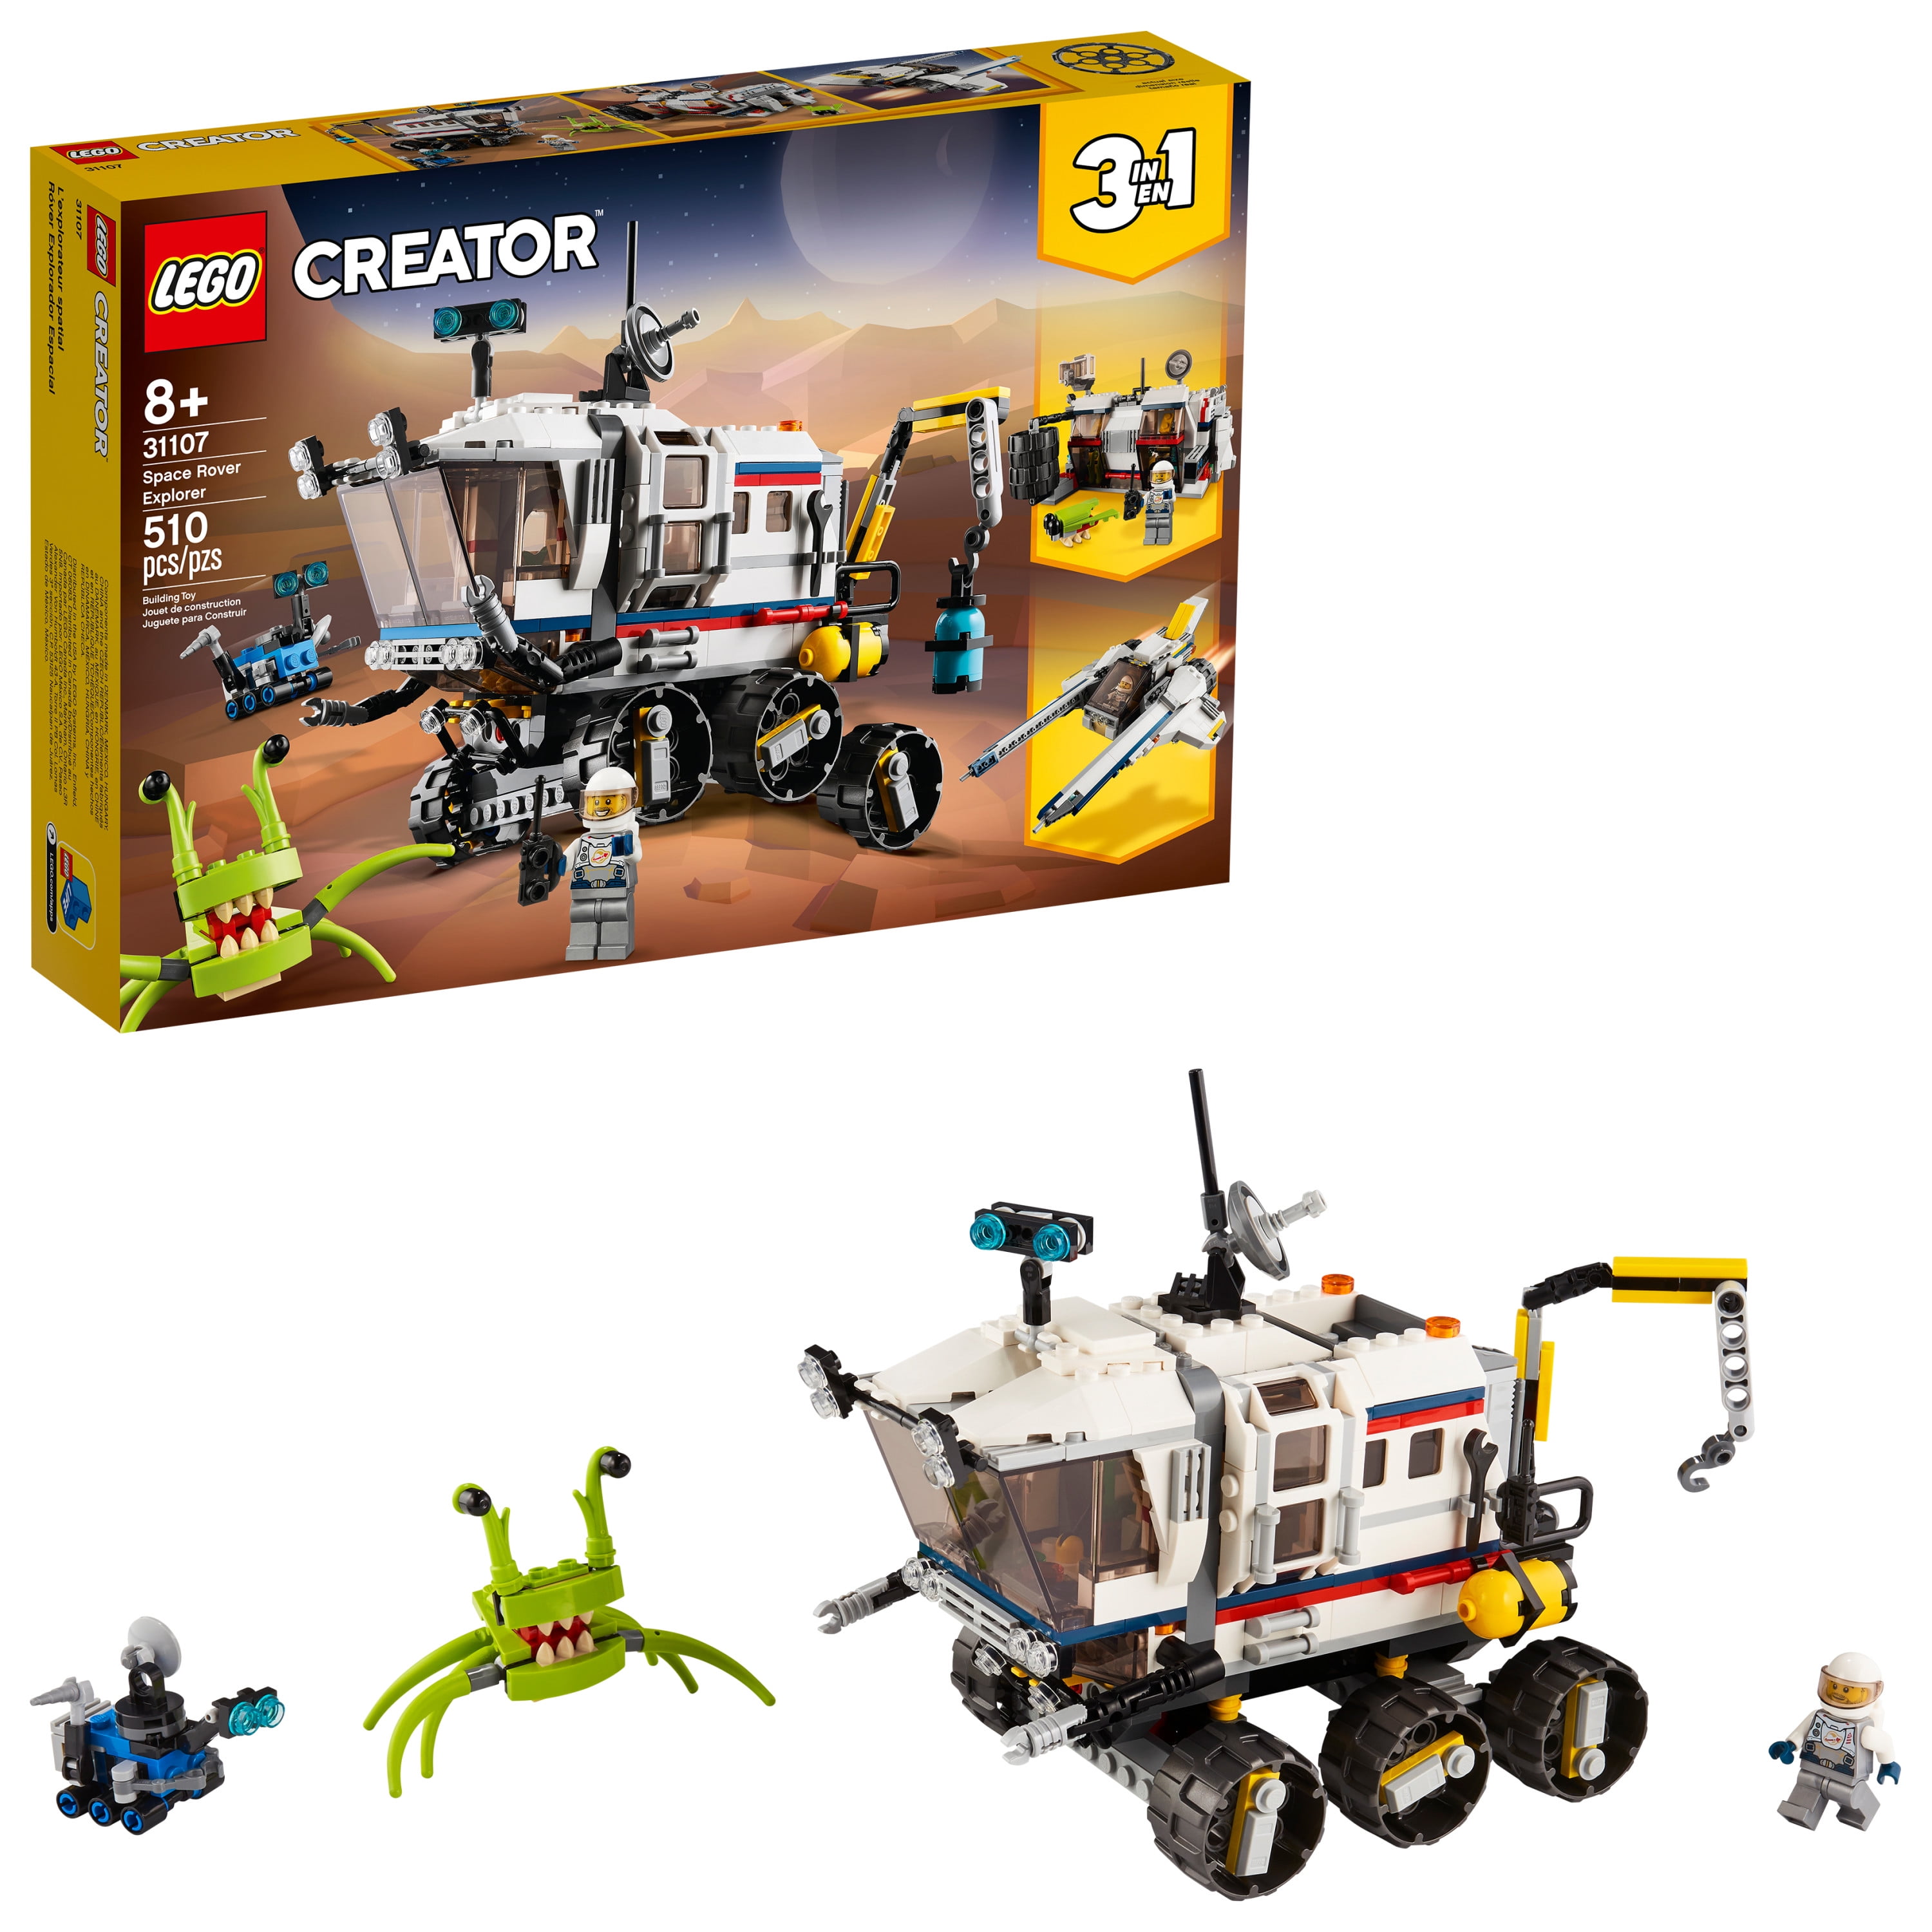 Lego 31107 Creator Space Rover Explorer Building Set 